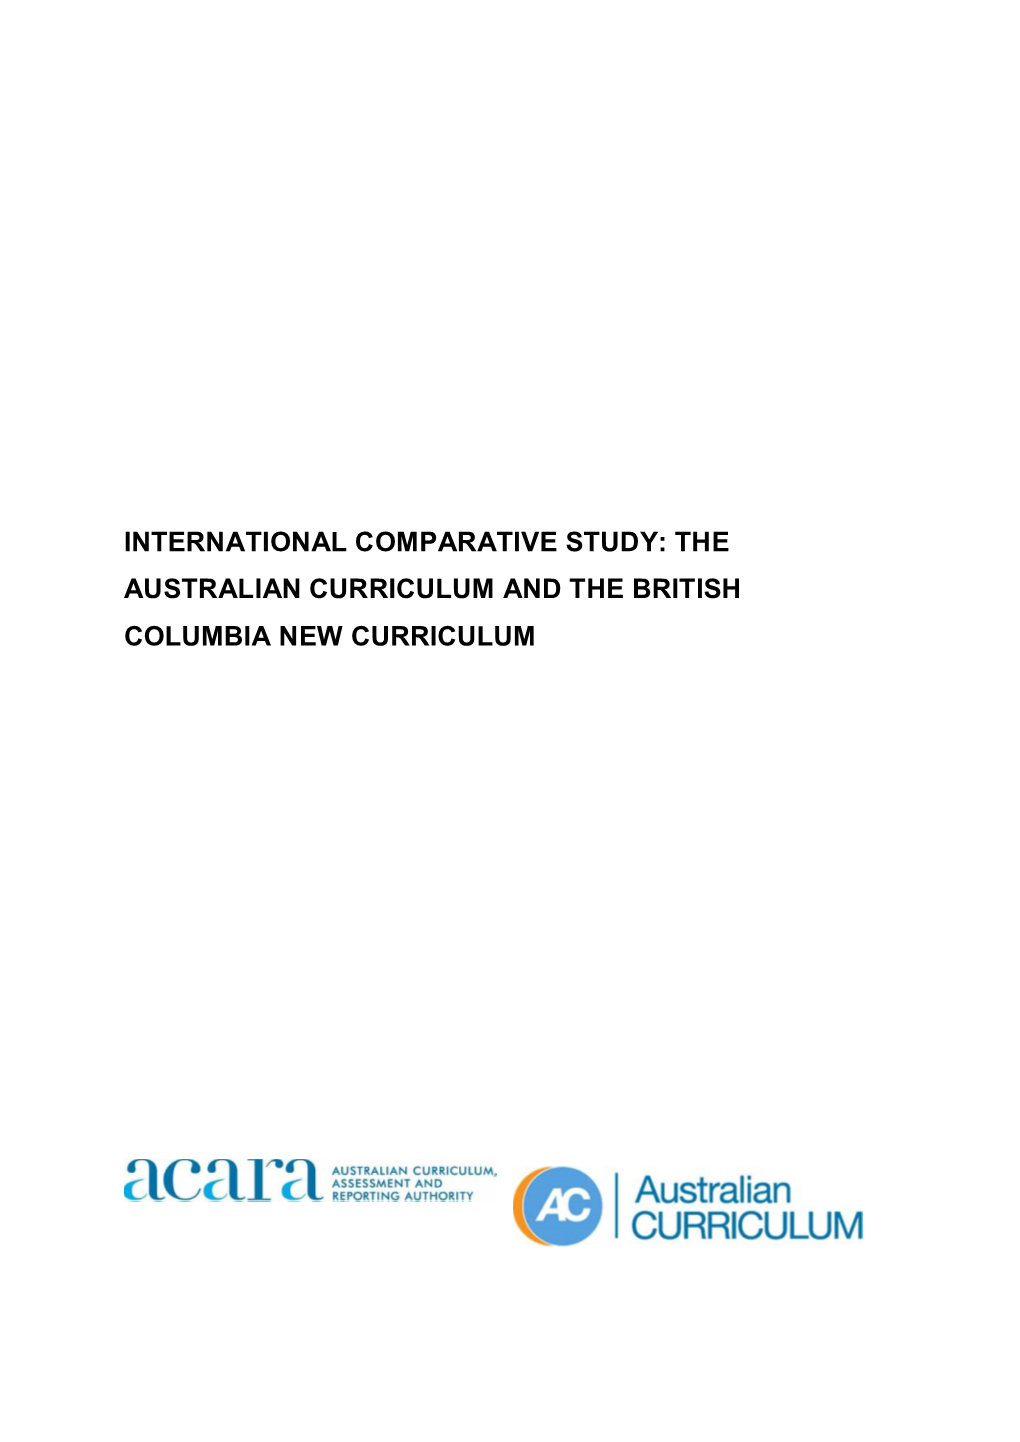 International Comparative Study: the Australian Curriculum and the British Columbia New Curriculum